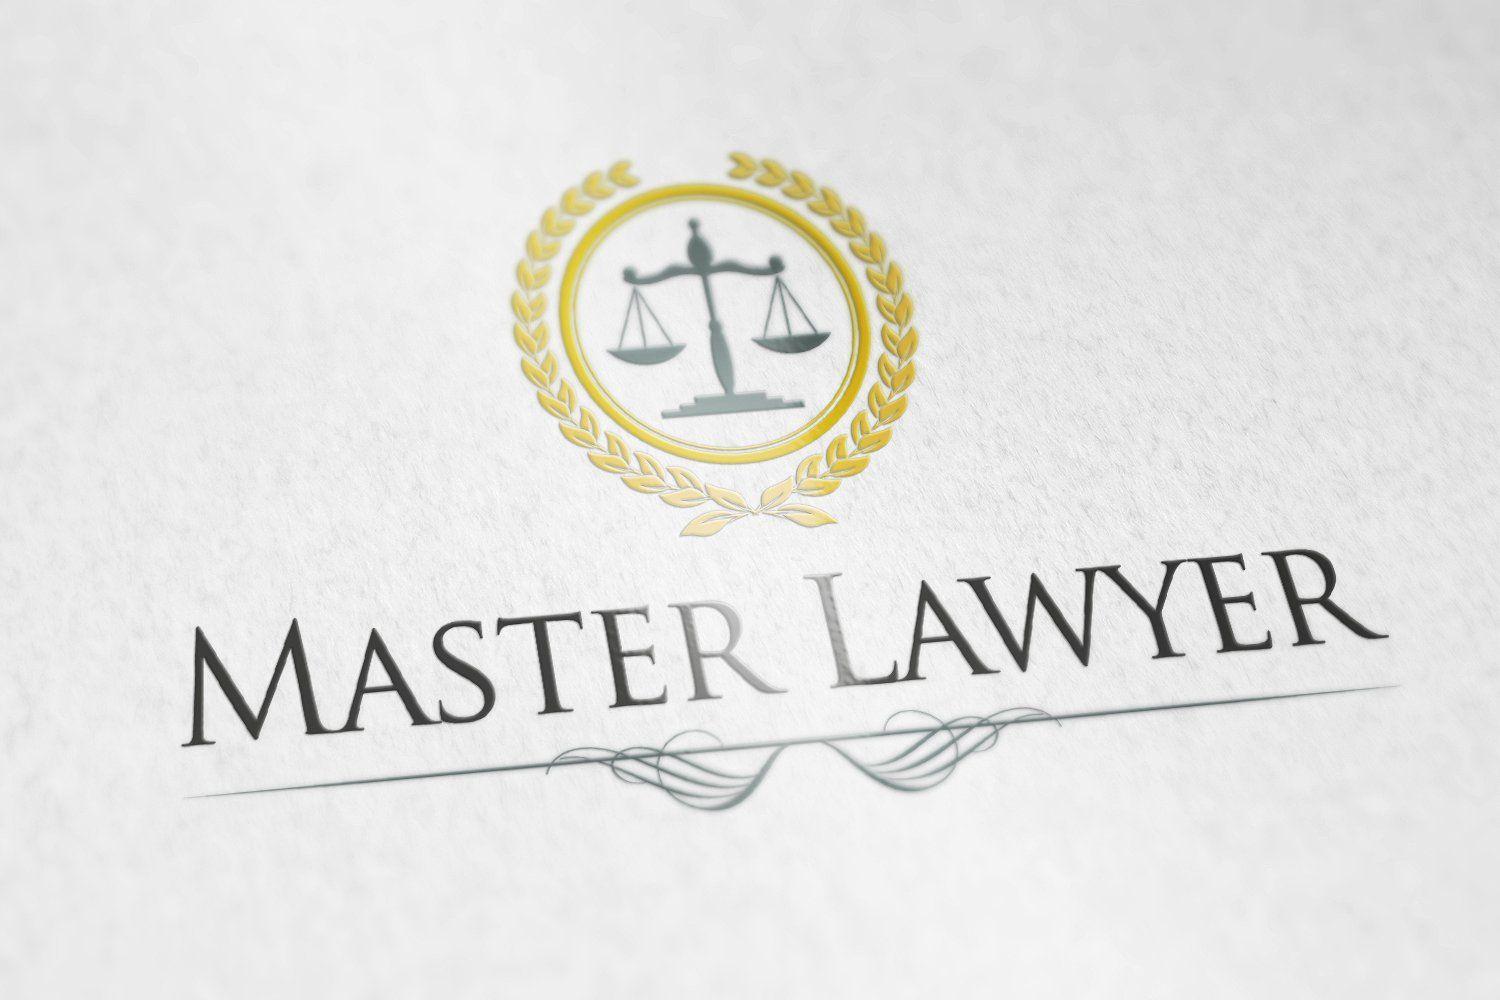 Lawyer Logo - Master Lawyer logo Logo Templates Creative Market